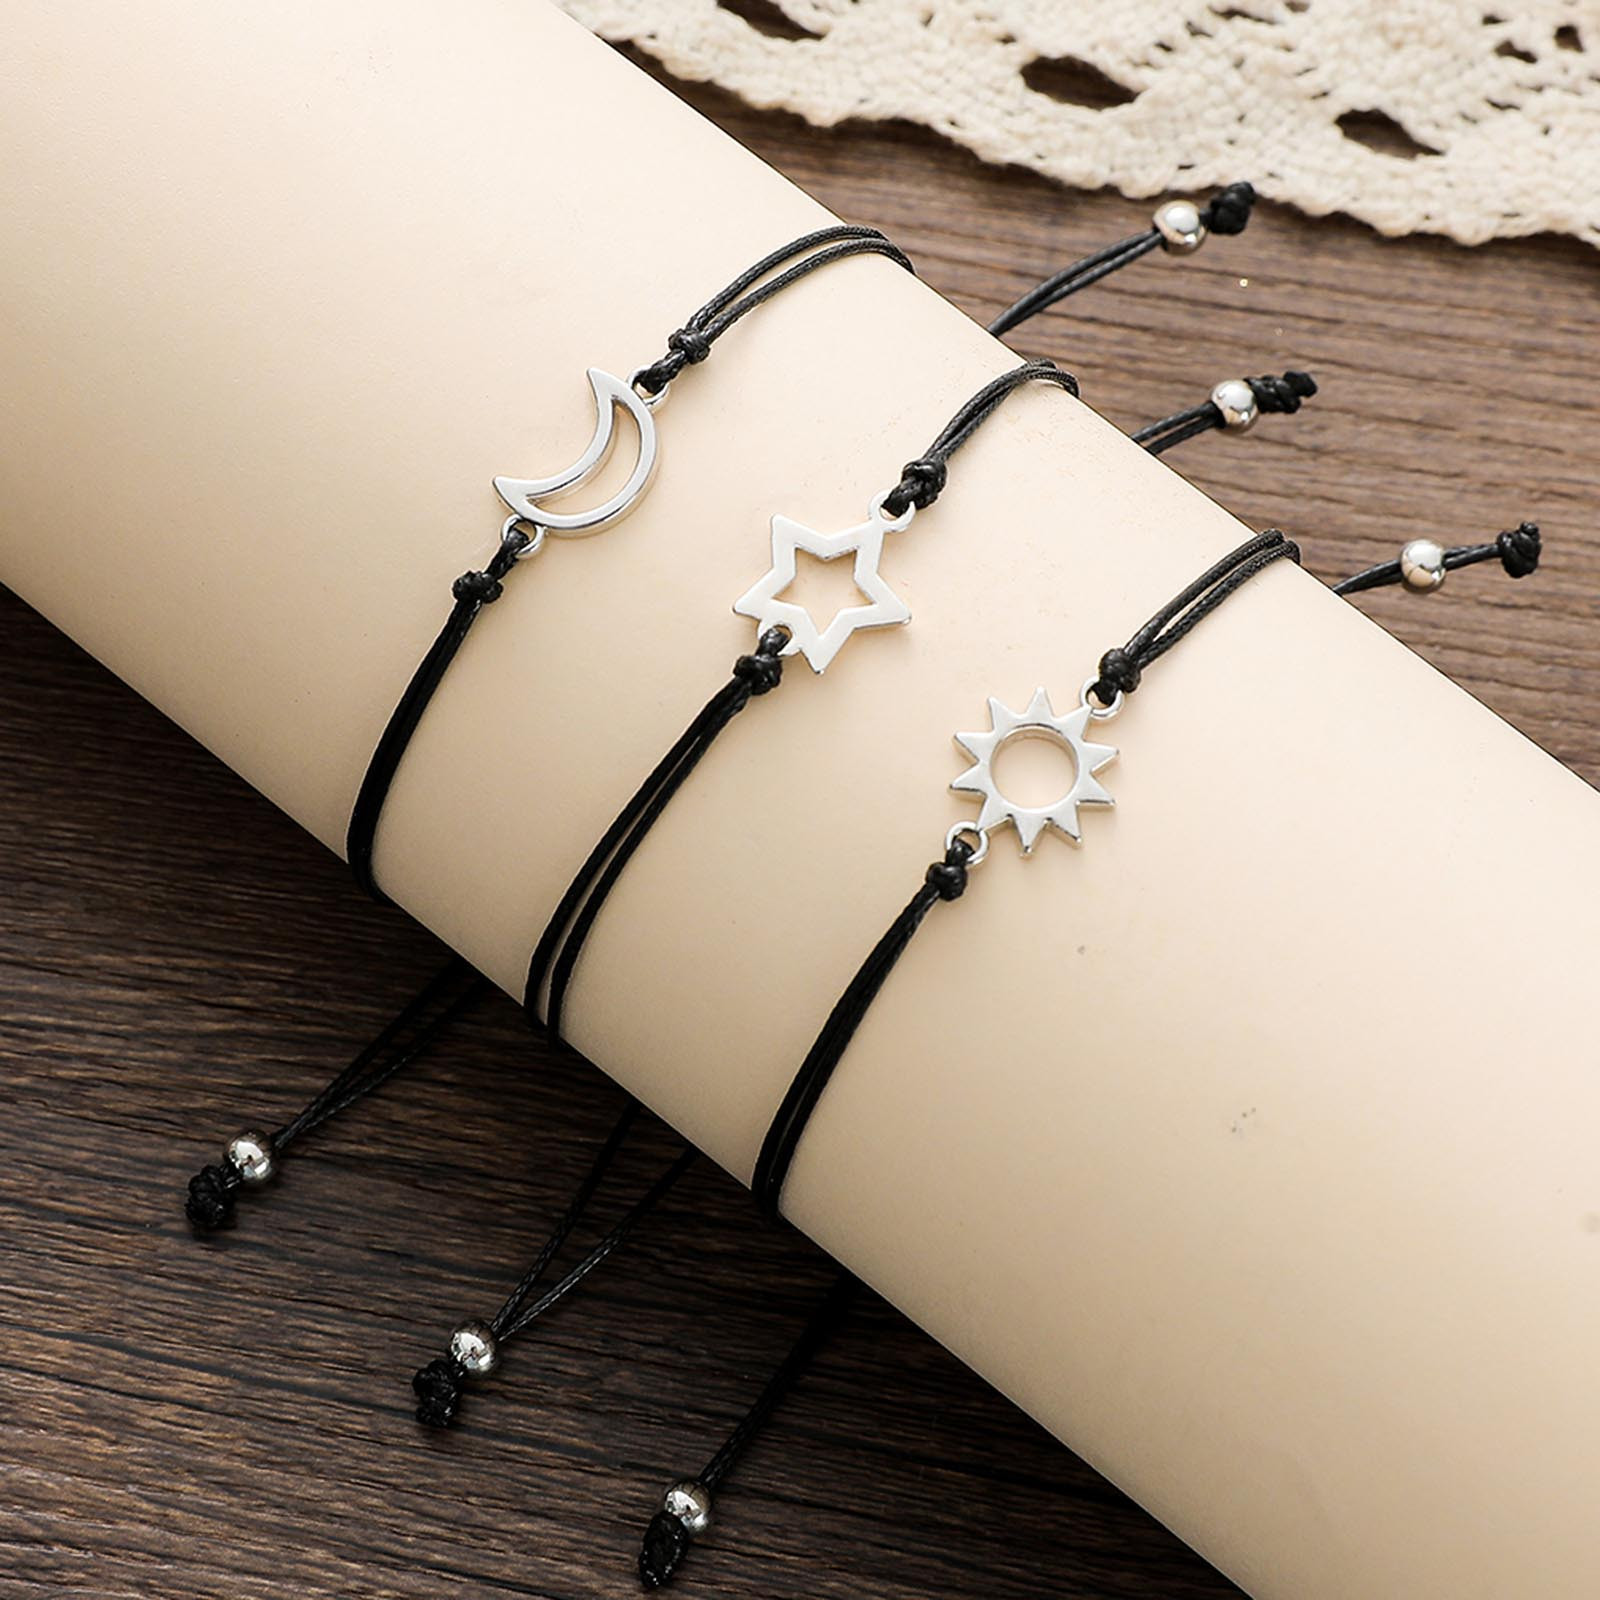 CFXNMZGR Bracelets for Women Friendship Star Jewelry Bracelet